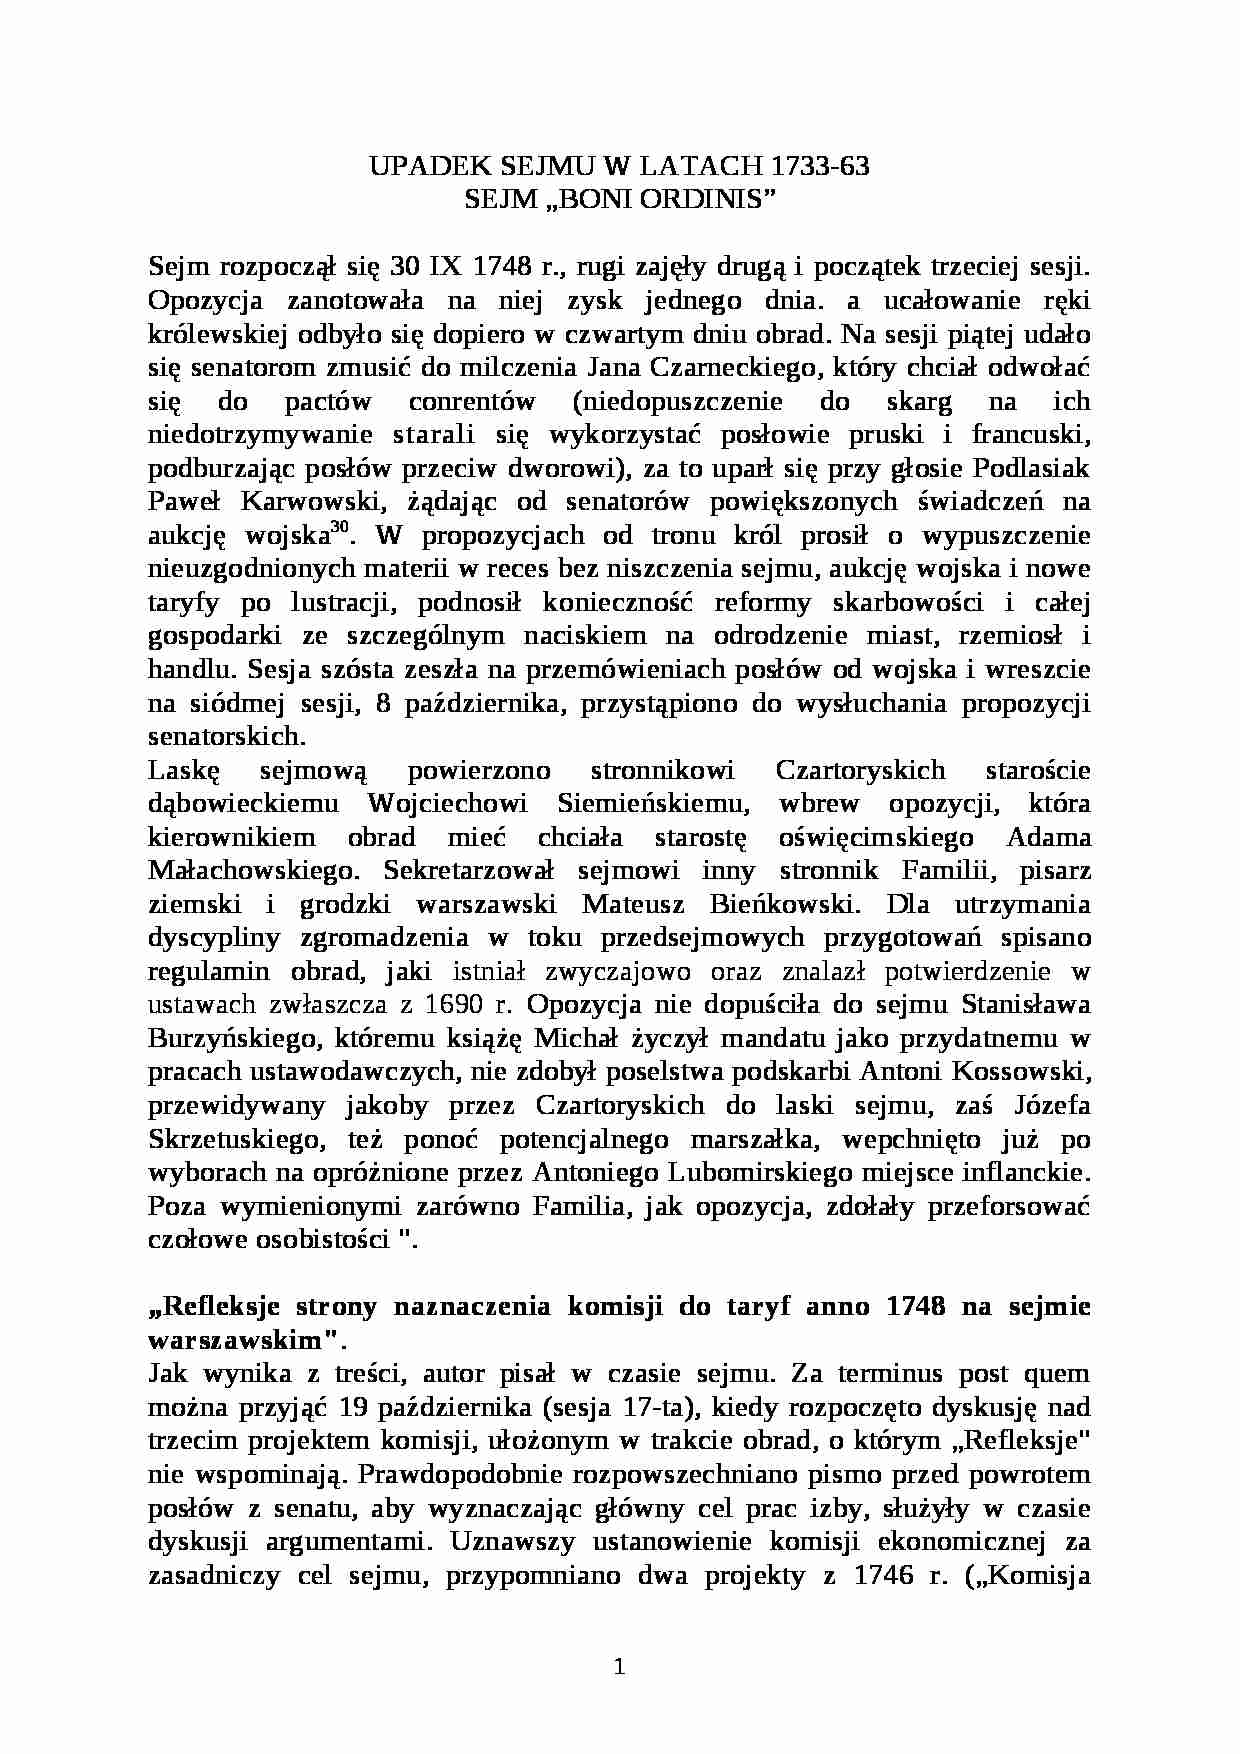 Upadek Sejmu w latach 1733-63 - strona 1